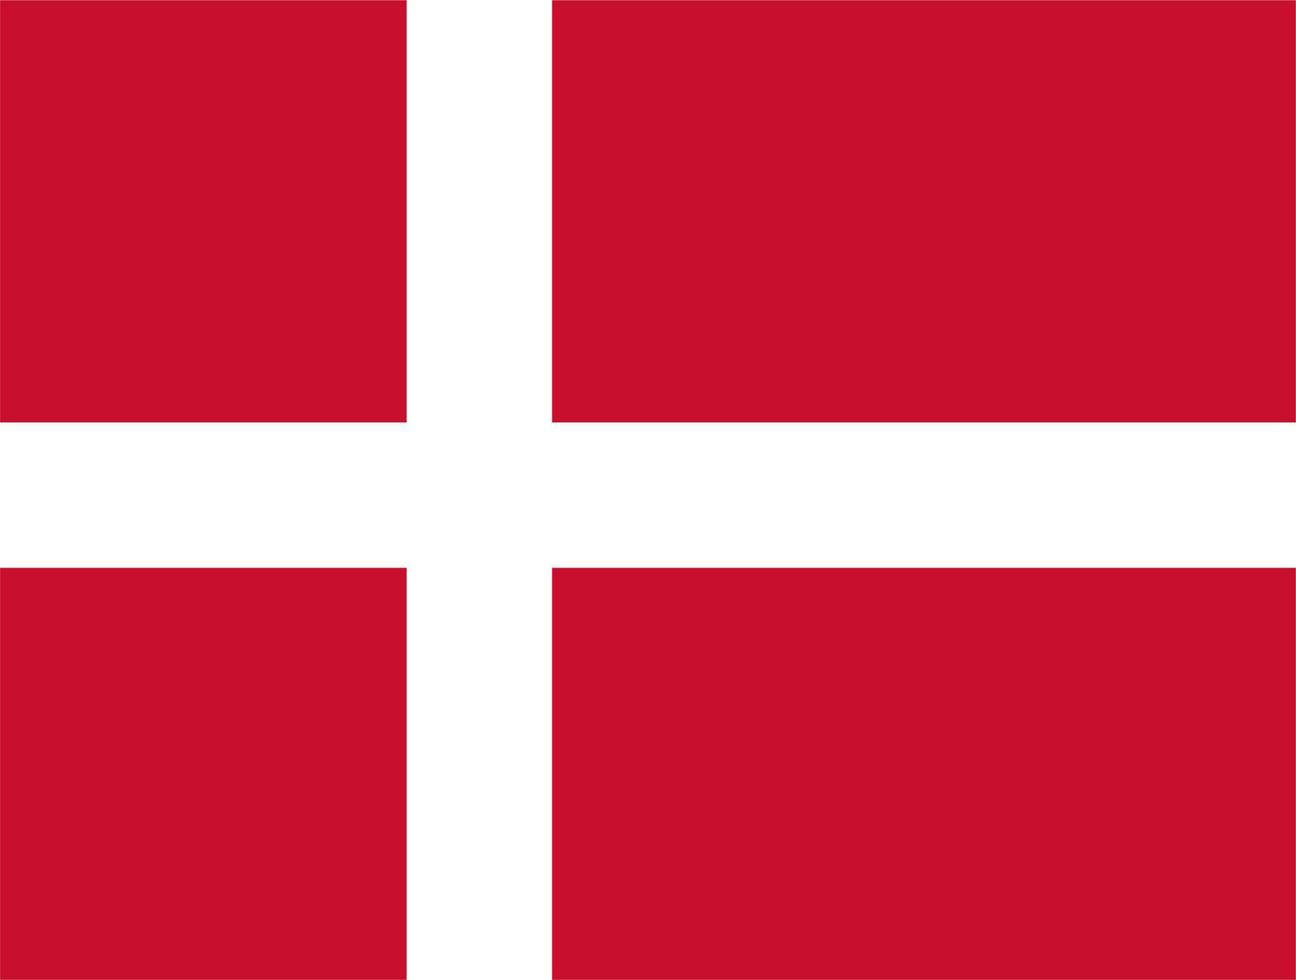 Denmark flag, national flag of Denmark high quality vector